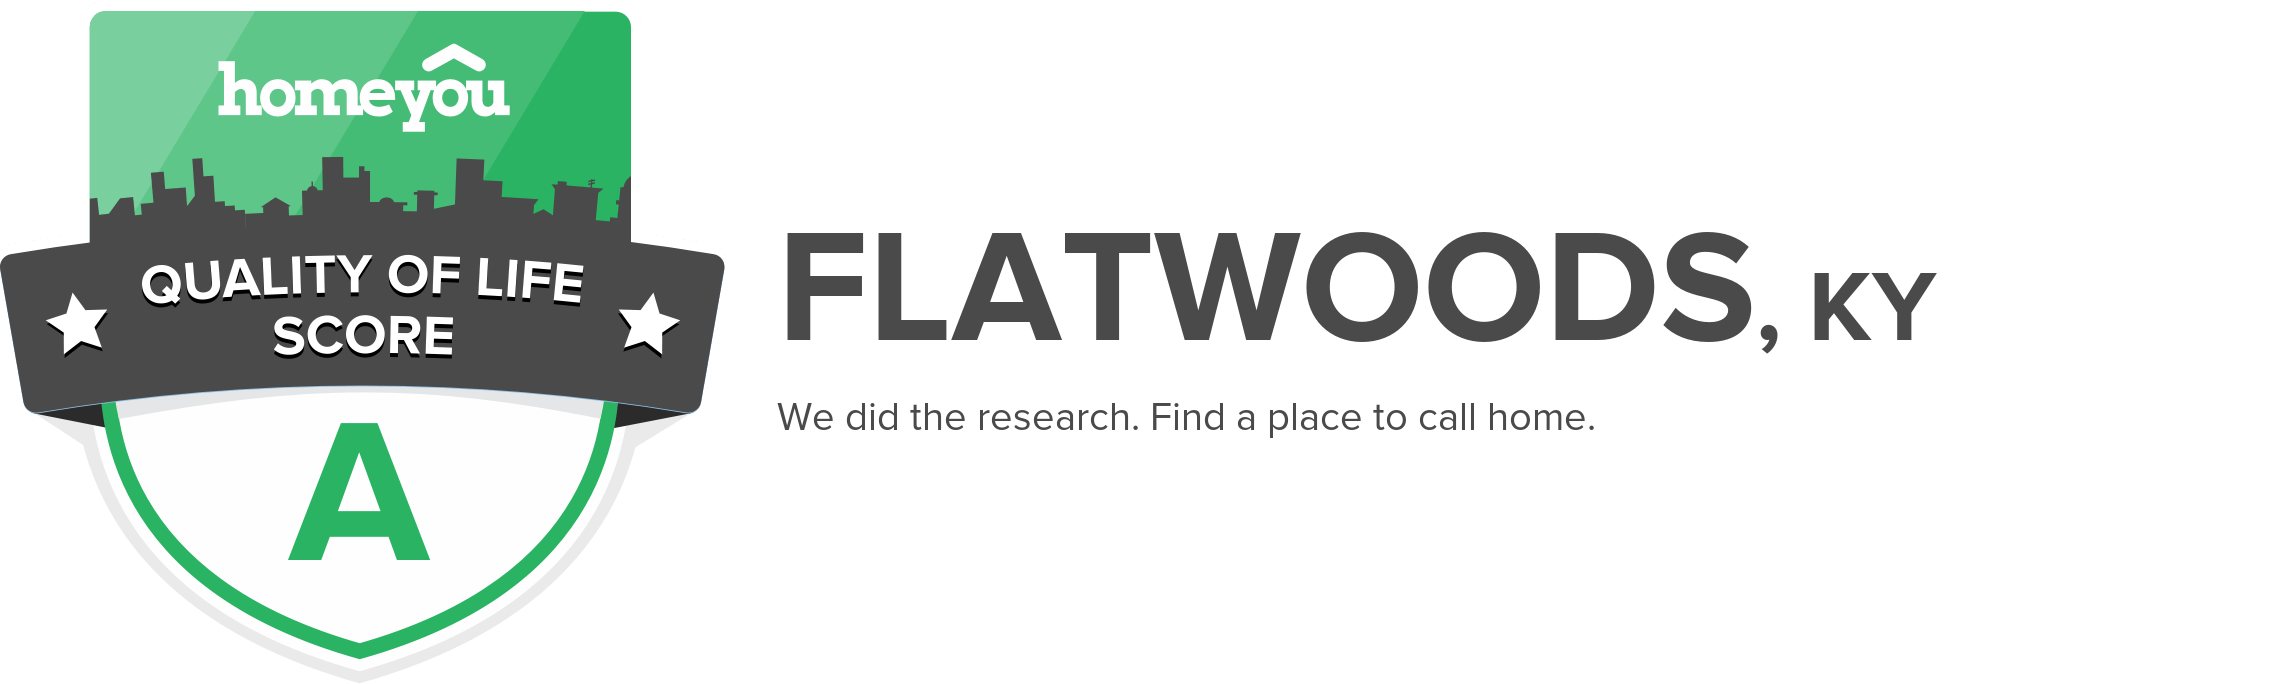 Flatwoods, KY